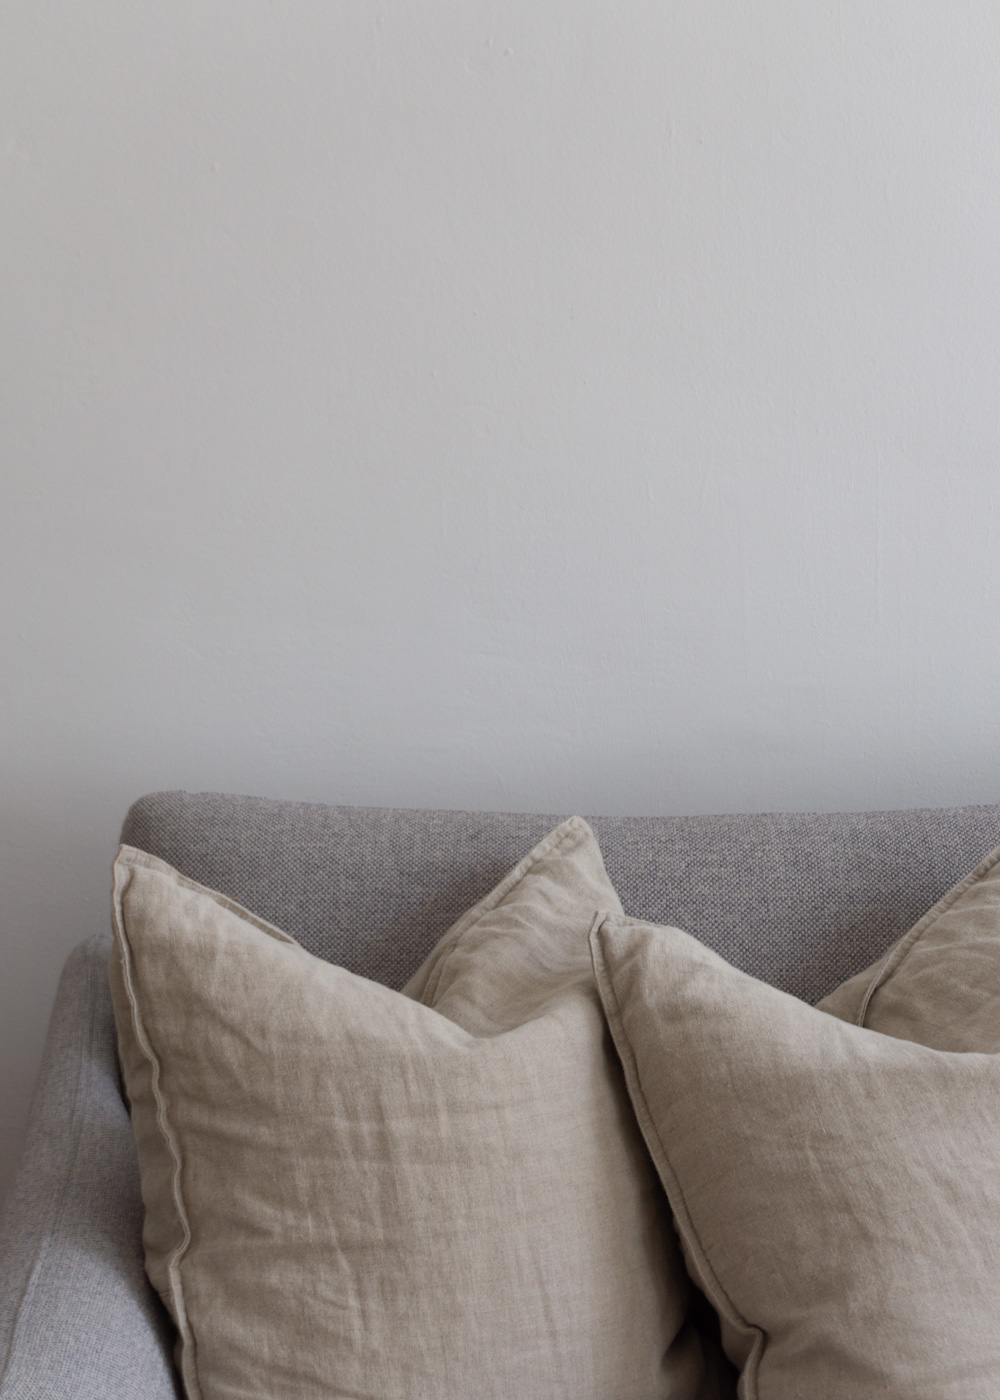 Pillows | neutral interior, white and beige home, wood floors, minimalist simple decor, natural berlin apartment, scandinavian design, calm aesthetic